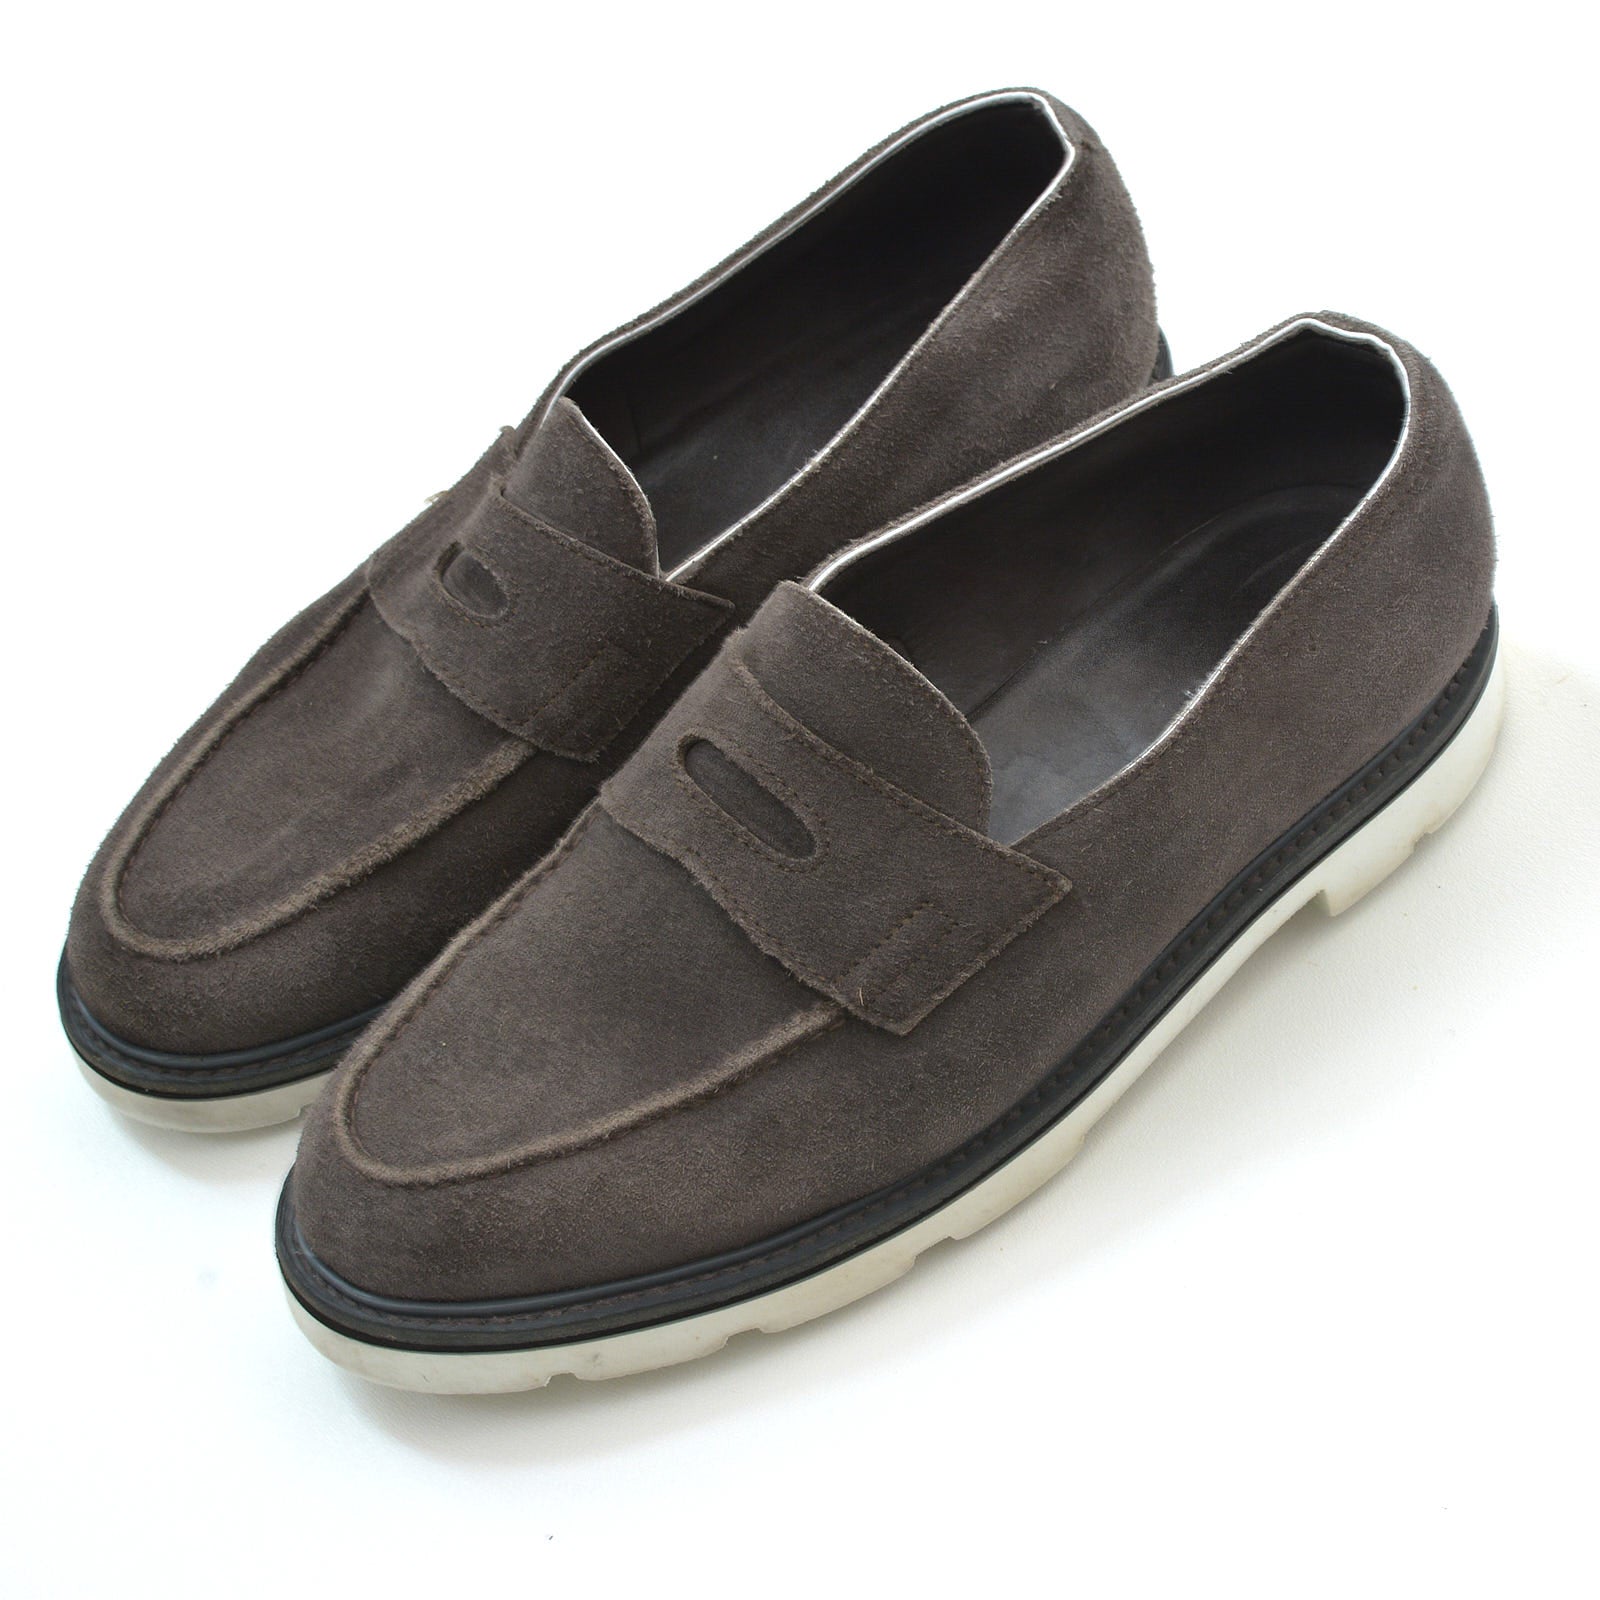 JOHN LOBB "Lopez" Gray Suede Leather Penny Loafer Shoes UK 8.5E US 9.5 JOHN LOBB